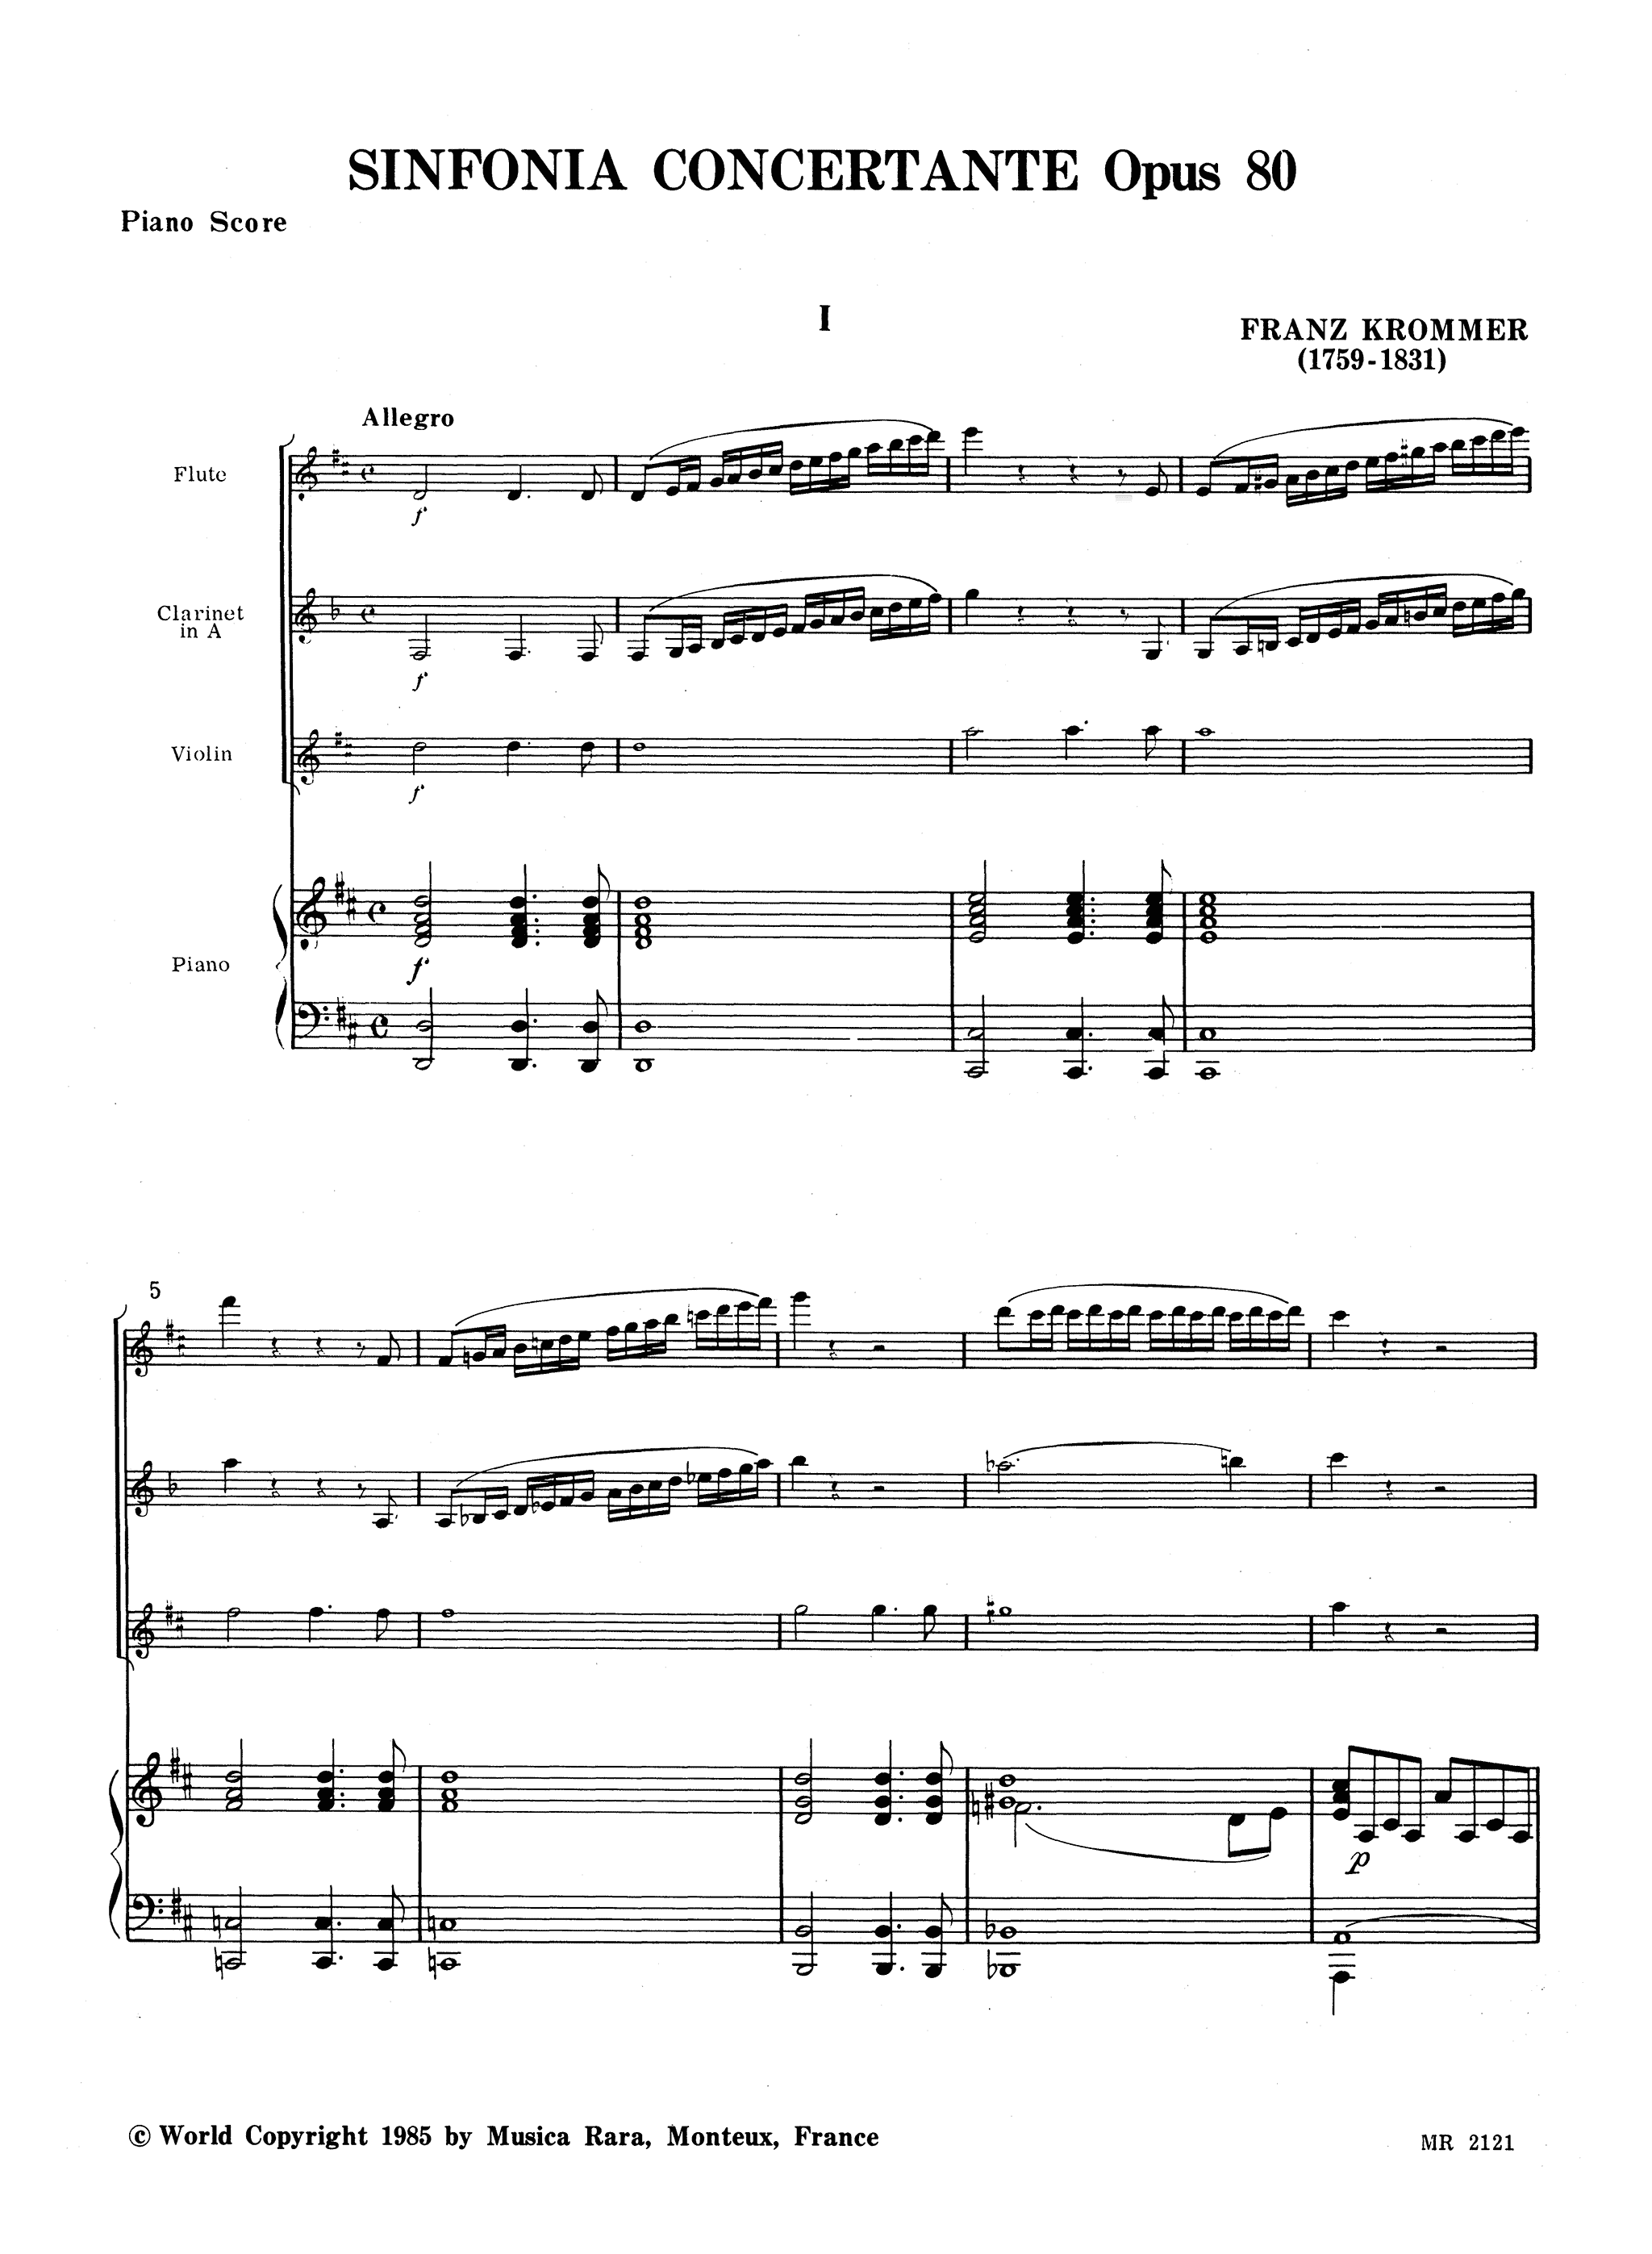 Sinfonia Concertante, Op. 80 - Movement 1